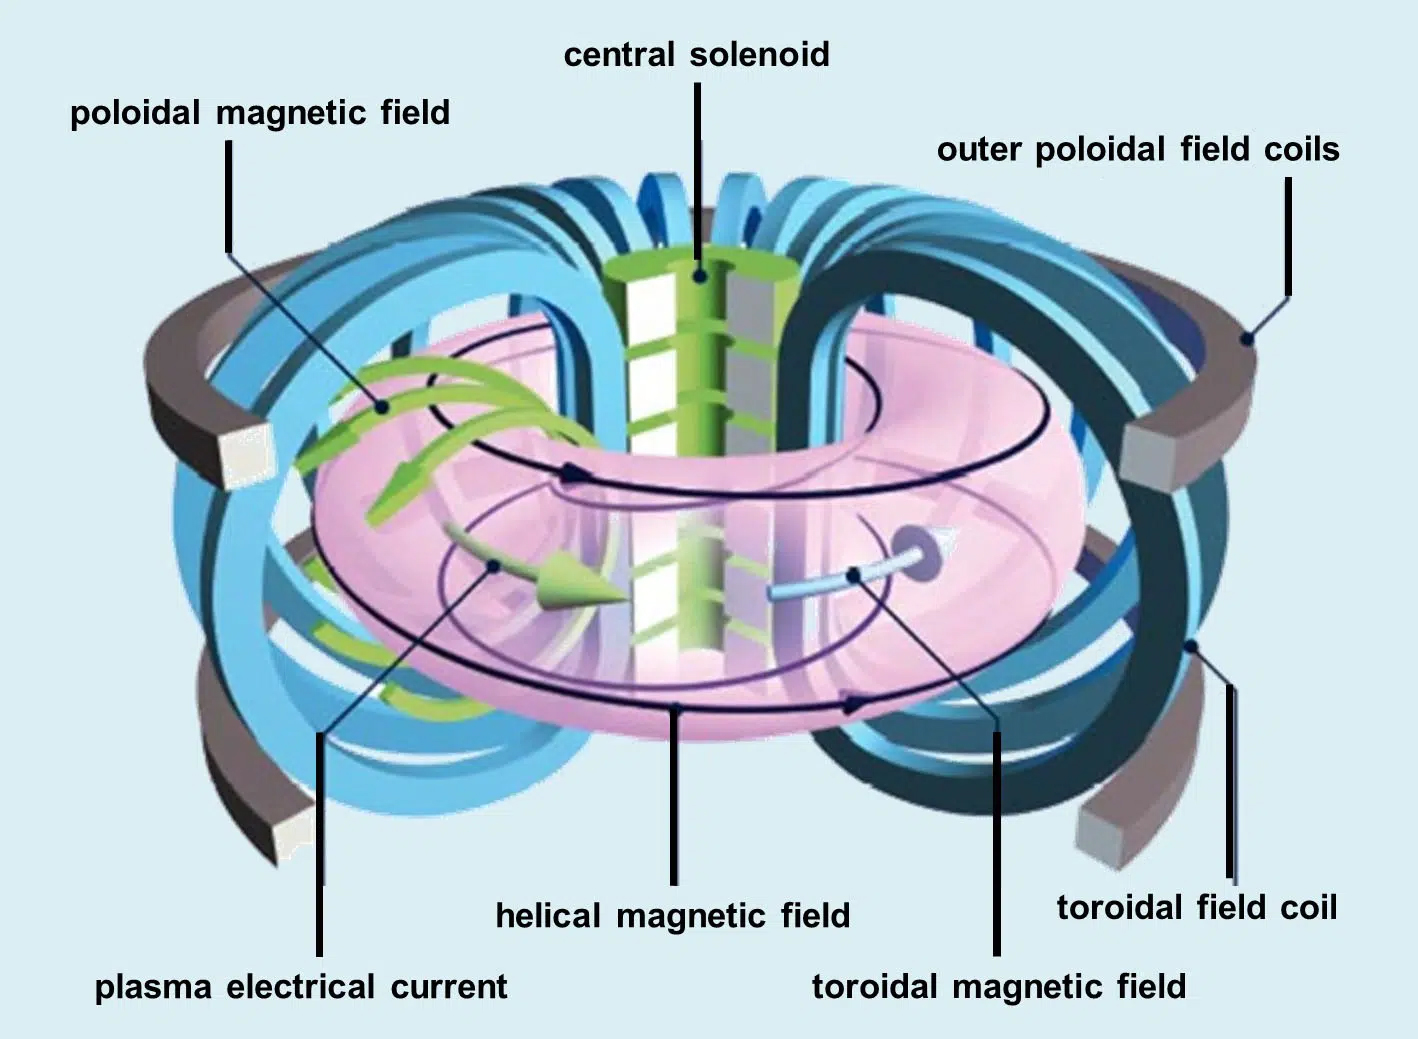 toroidal field coils